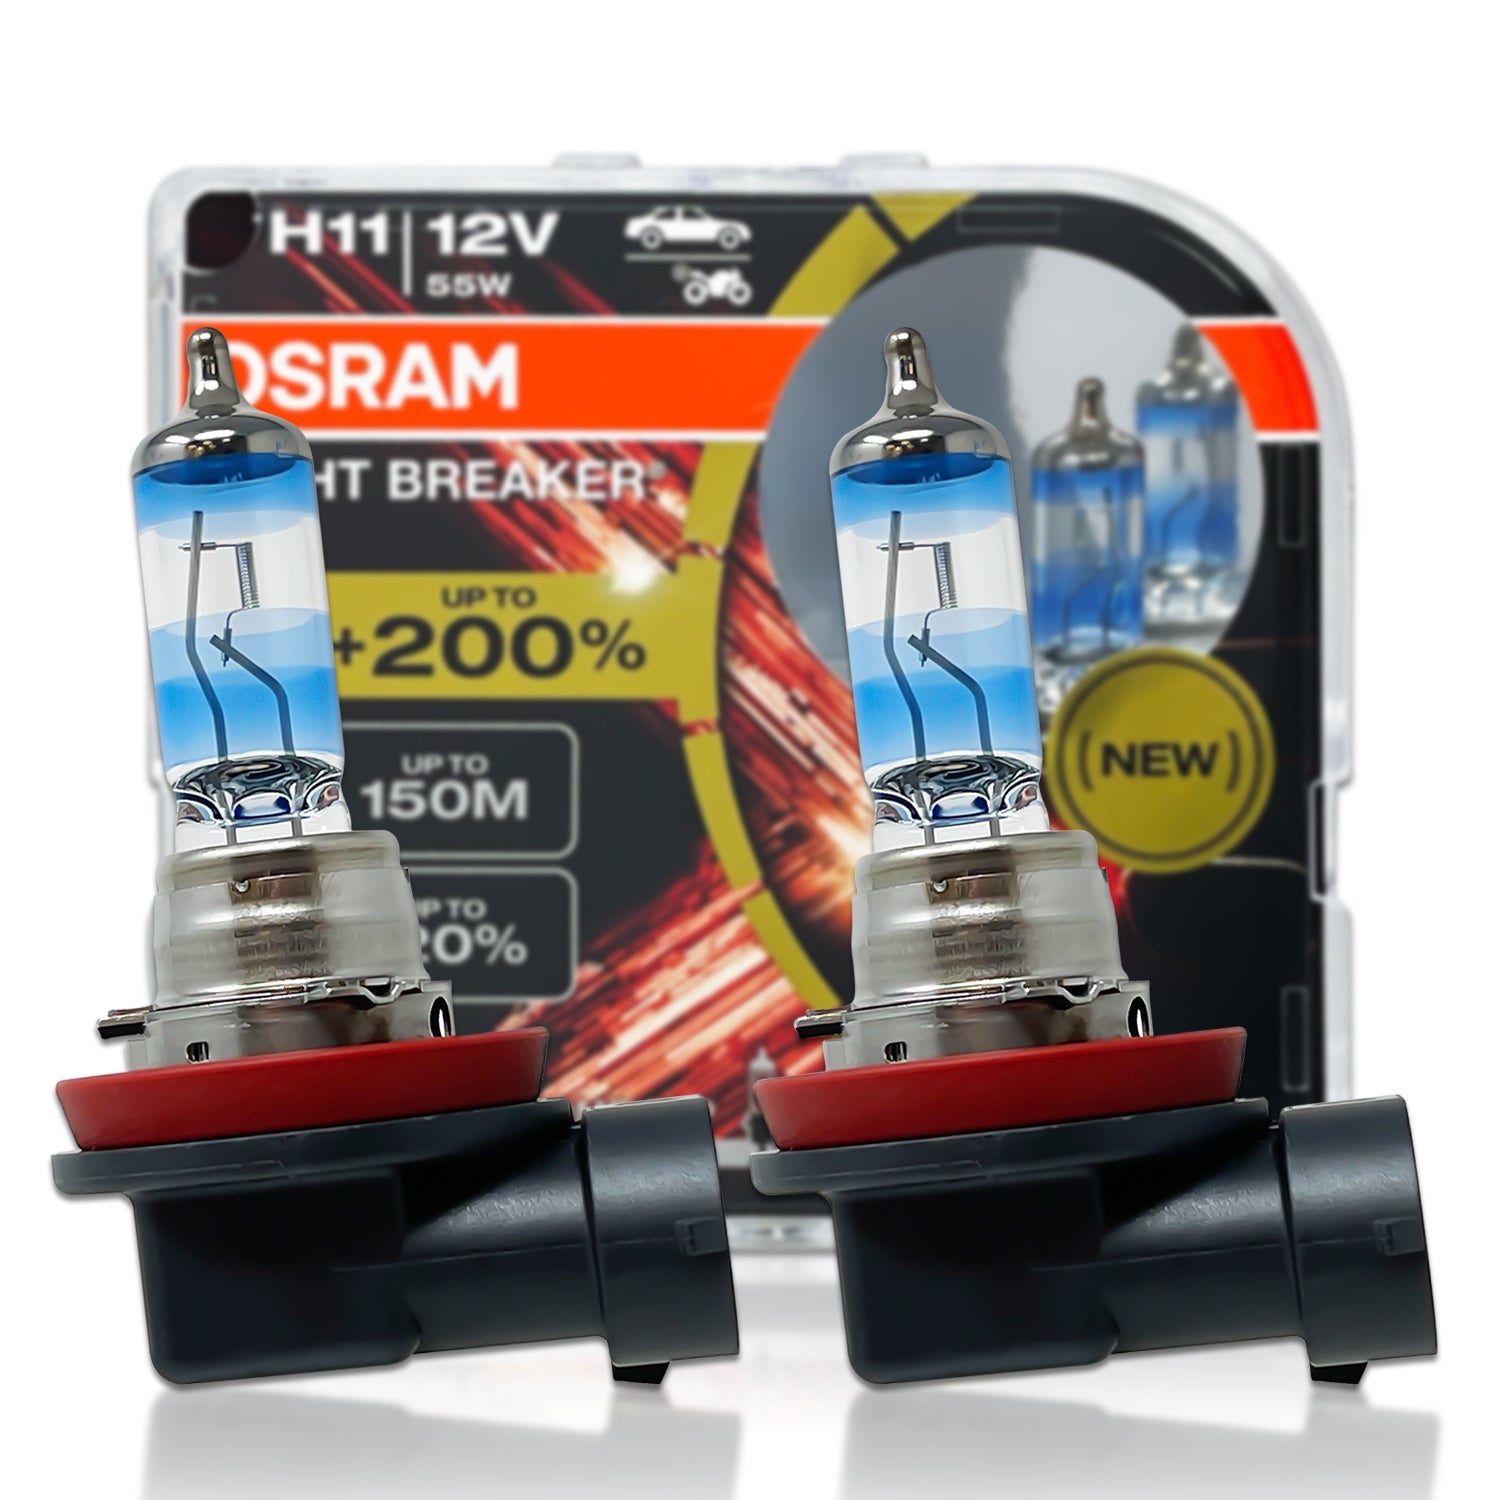 H11 OSRAM Night Breaker Laser Halogen Bulbs – HID CONCEPT